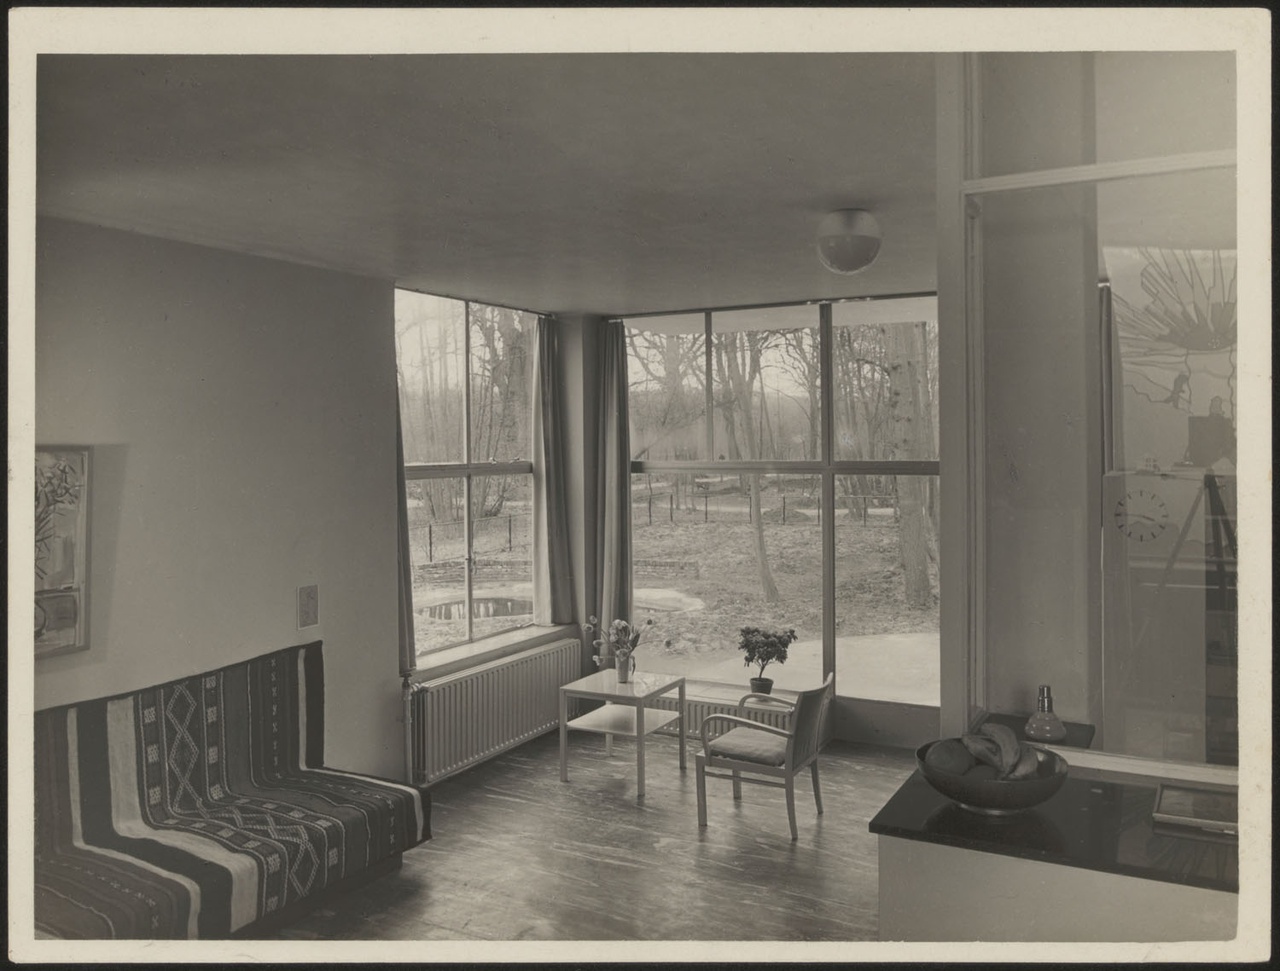 Afbeelding van woning Hillebrand, interieur woonkamer met hoekramen, stoel en tafeltje